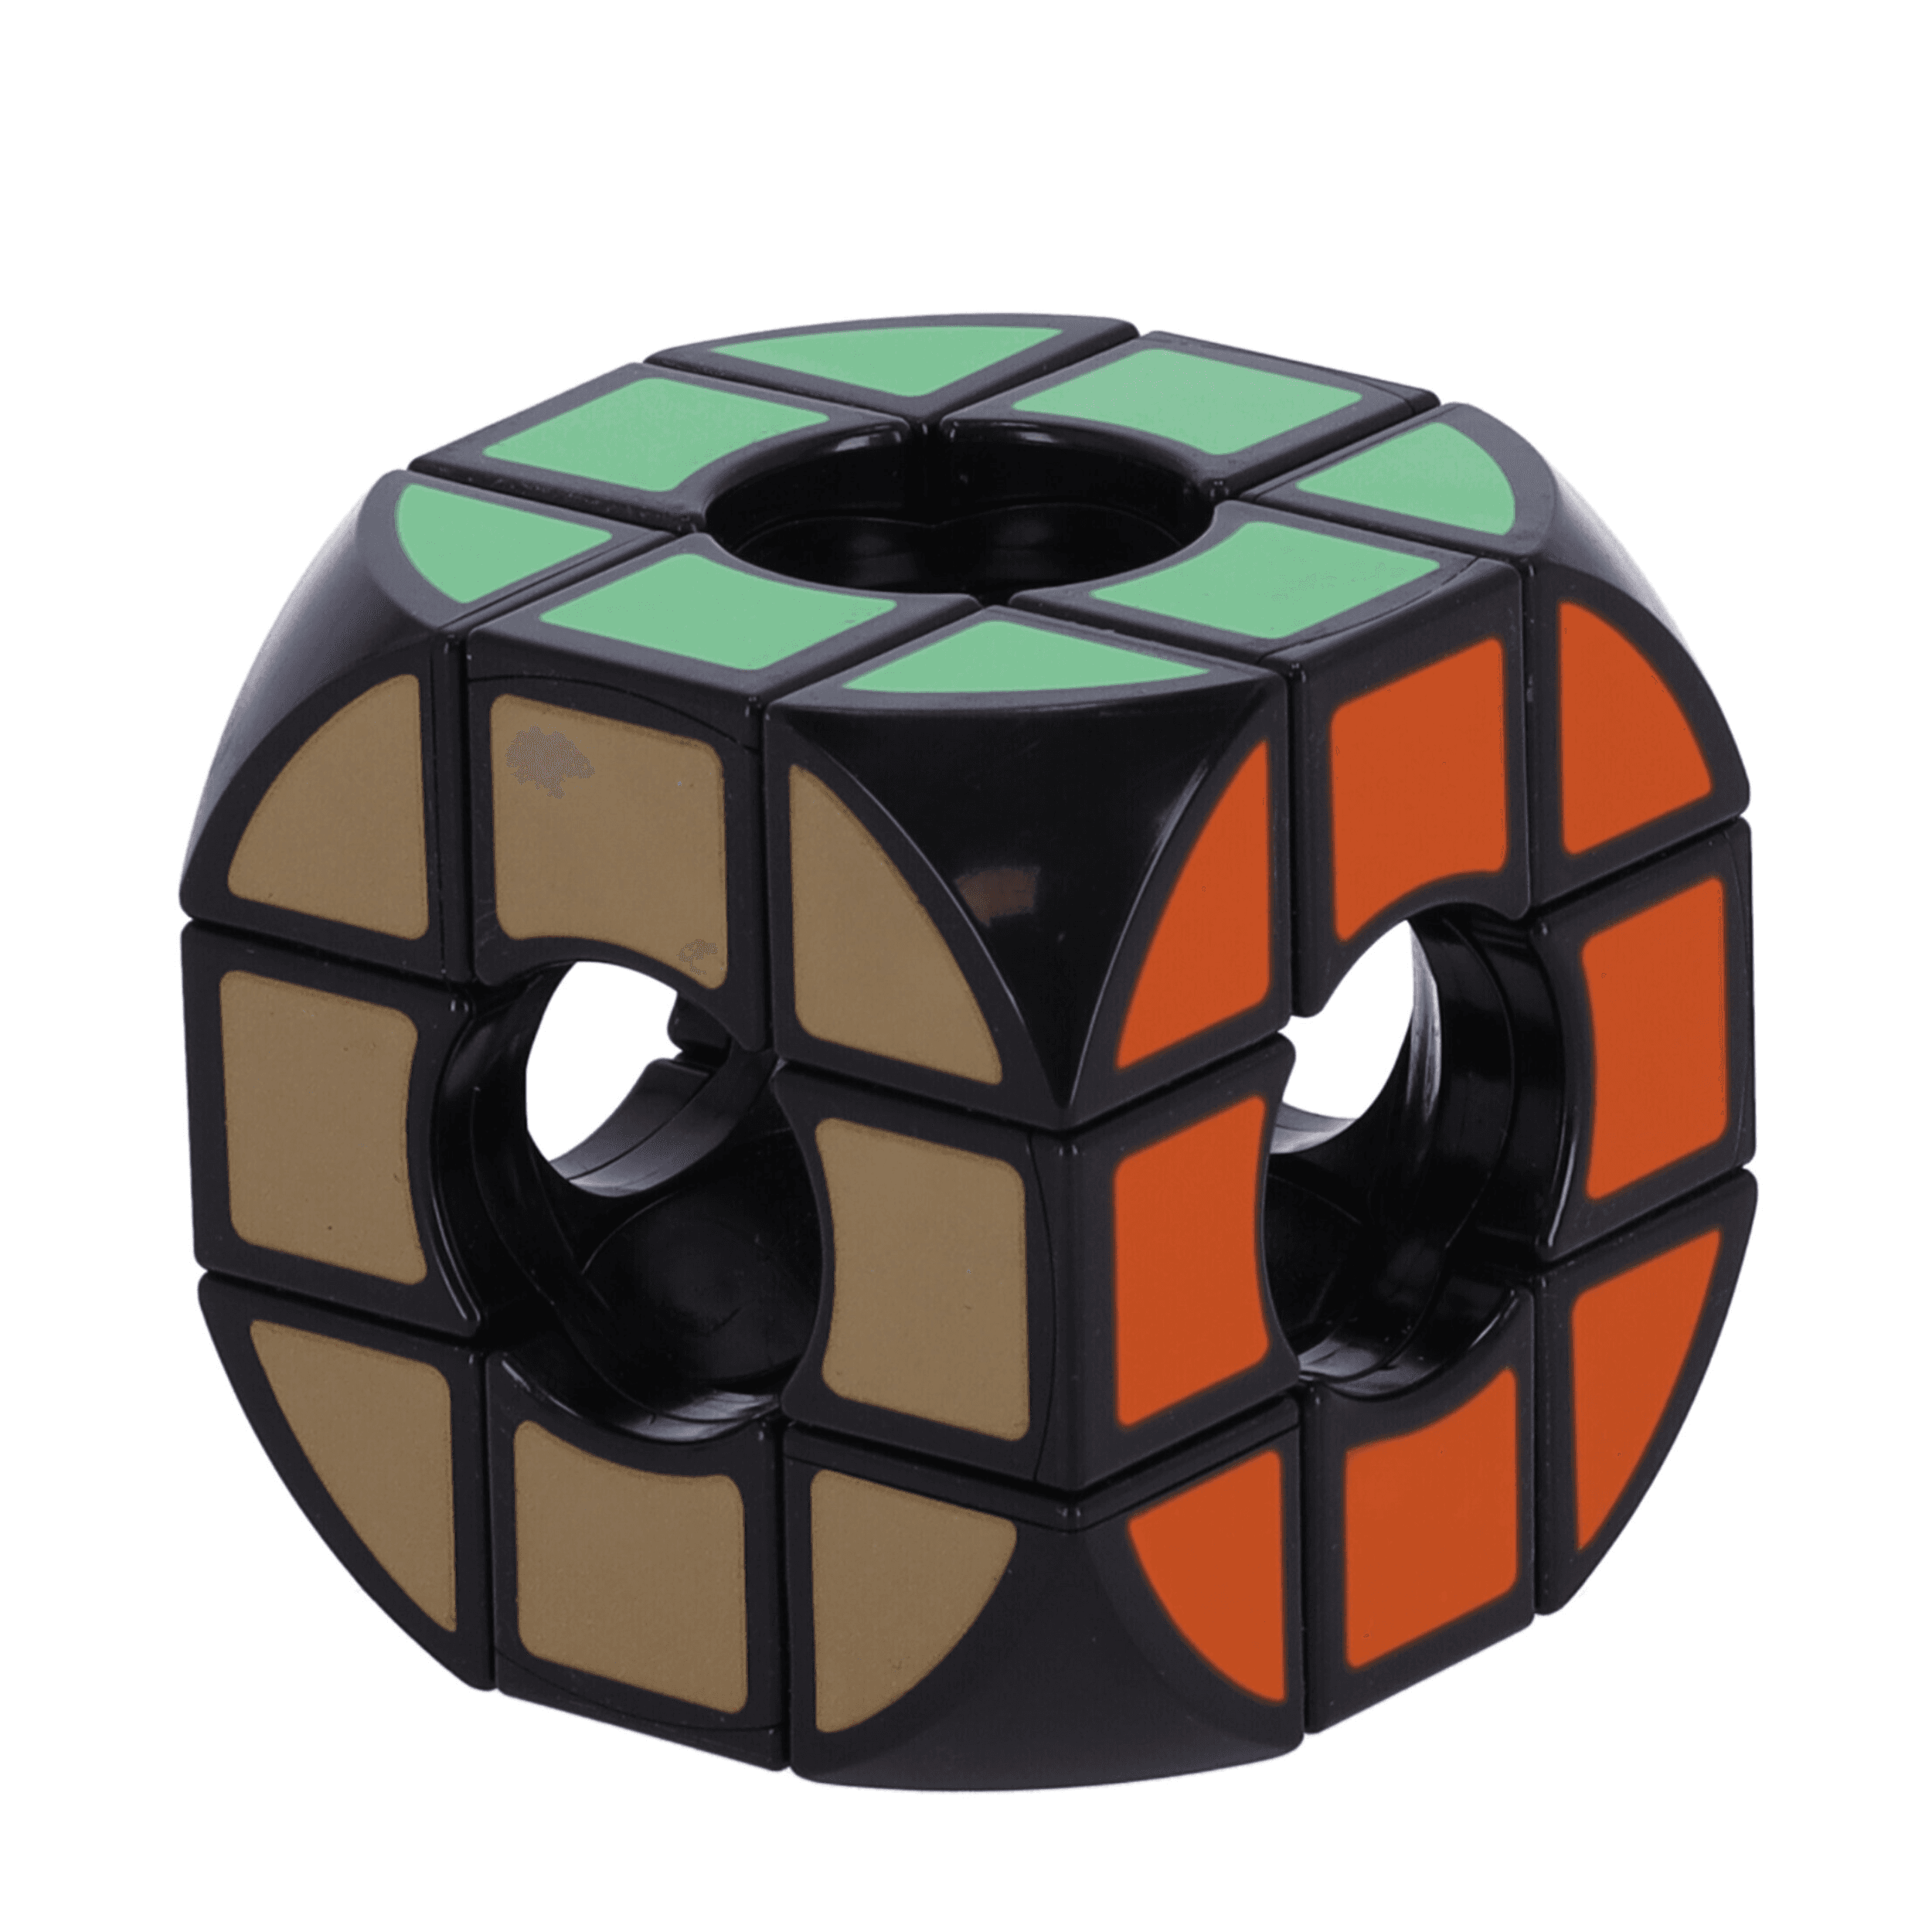 Modern jigsaw puzzle, logic cube, Rubik's Cube - Void, type II